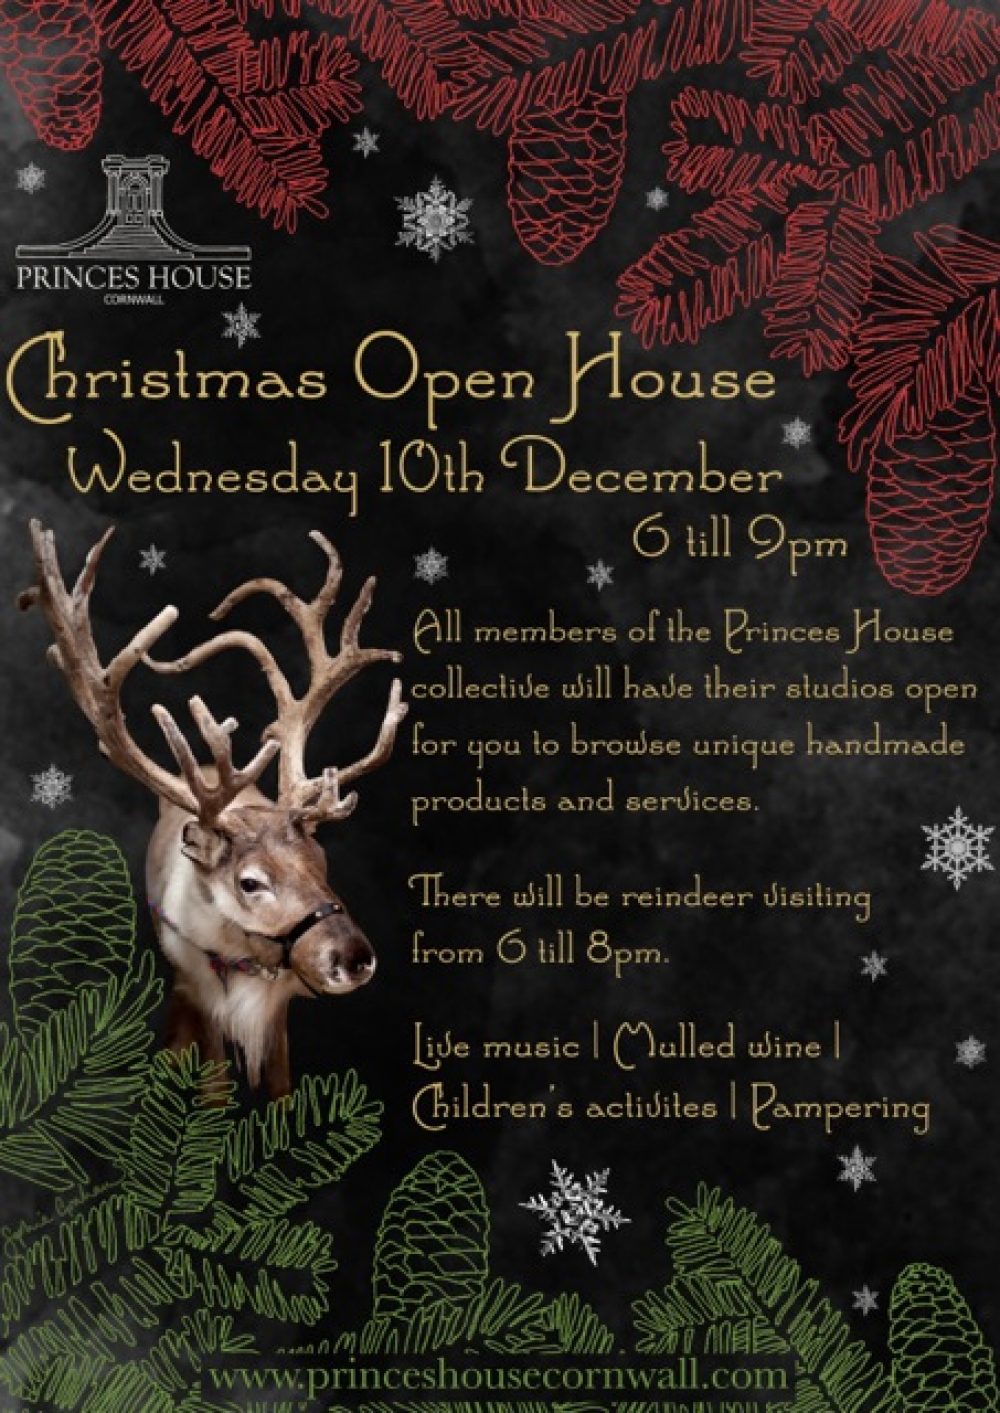 Princes House Christmas Open House